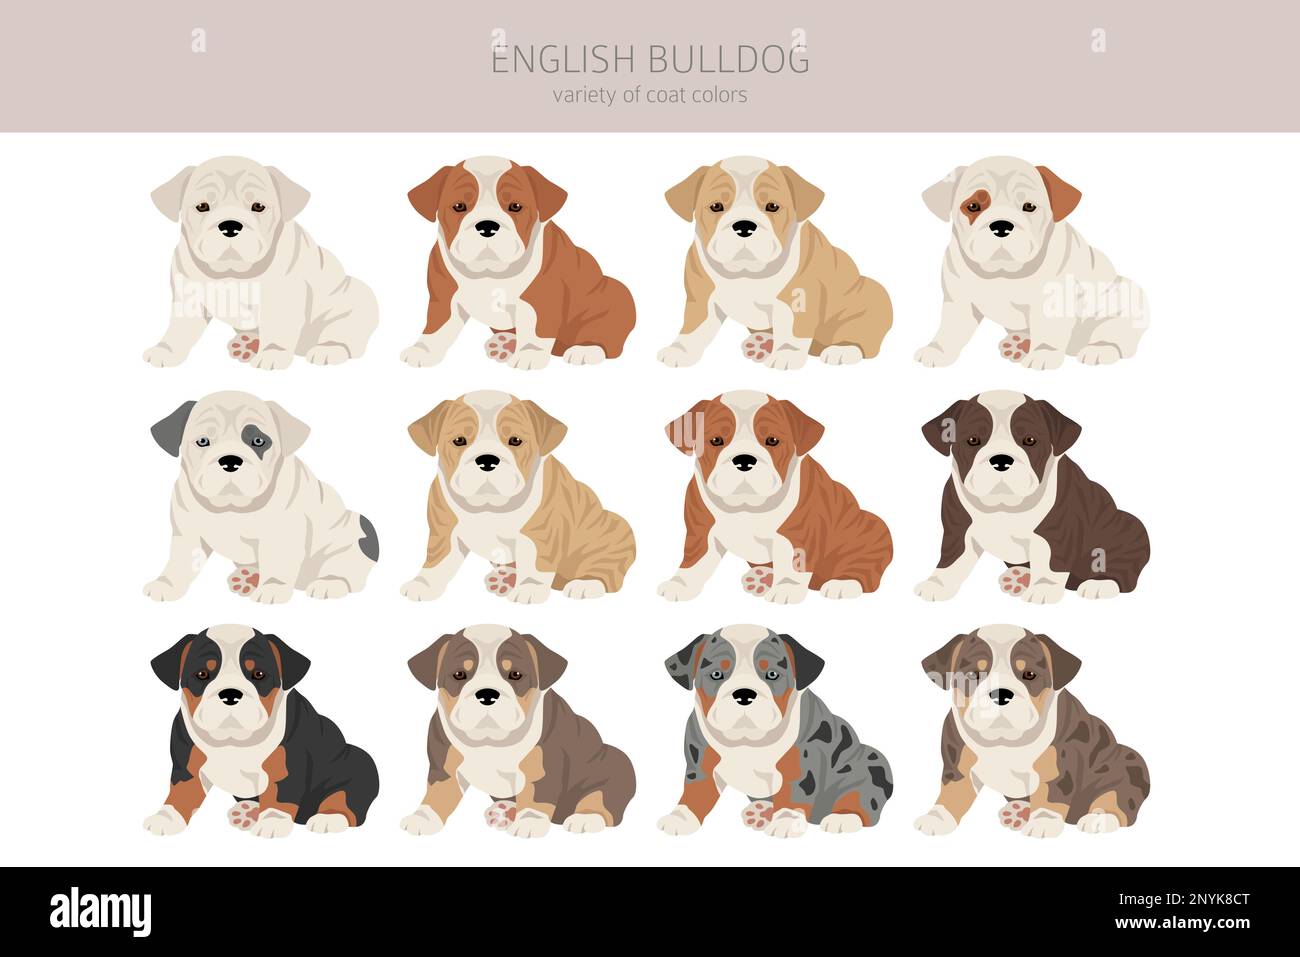 English bulldog clipart. Different poses, coat colors set.  Vector illustration Stock Vector